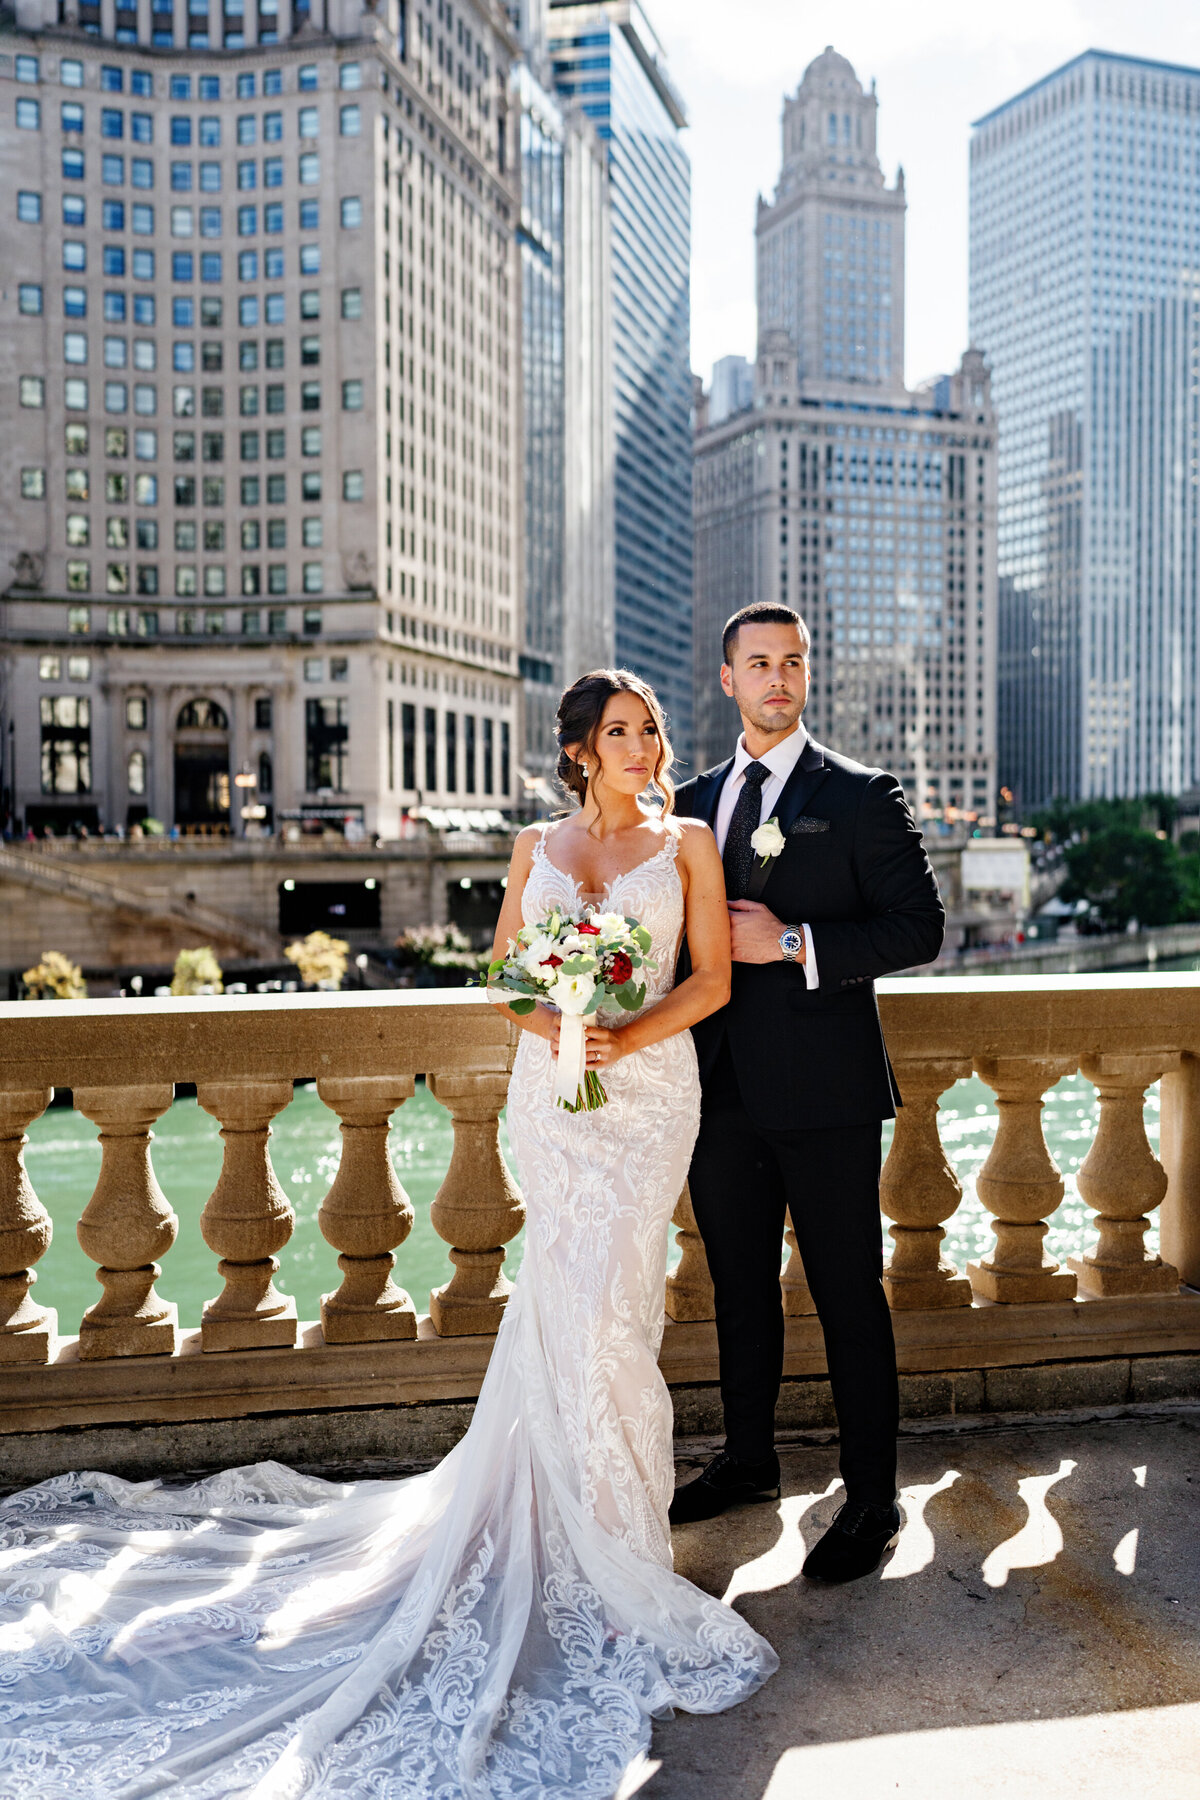 Aspen-Avenue-Chicago-Wedding-Photographer-Fairlie-simply-elegant-xo-anna-held-floral-studio-tamara-makeup-rustic-modern-hocky-fun-hype-elegant-Chicago-Loft-industrial-Romantic-XO-Art-And-Design-FAV-75